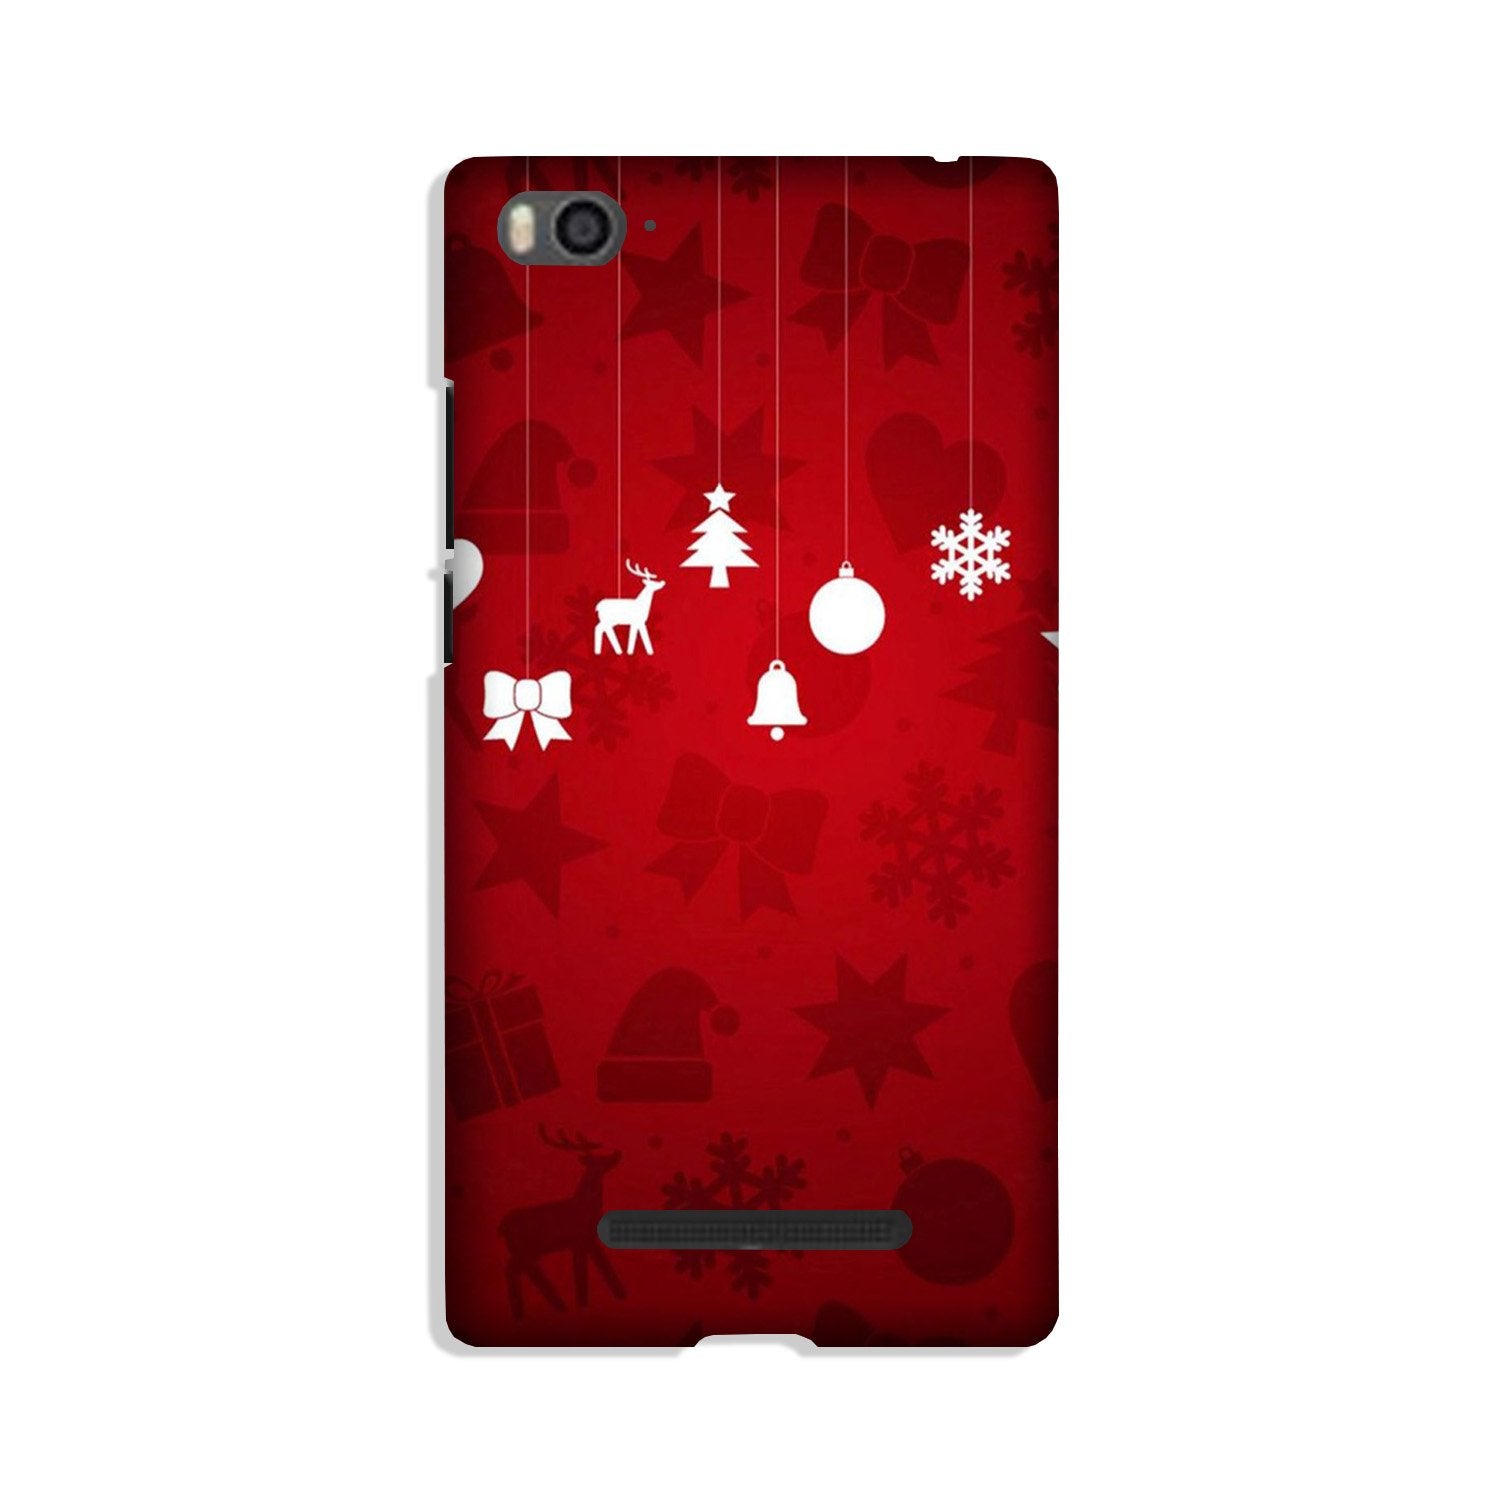 Christmas Case for Xiaomi Mi 4i